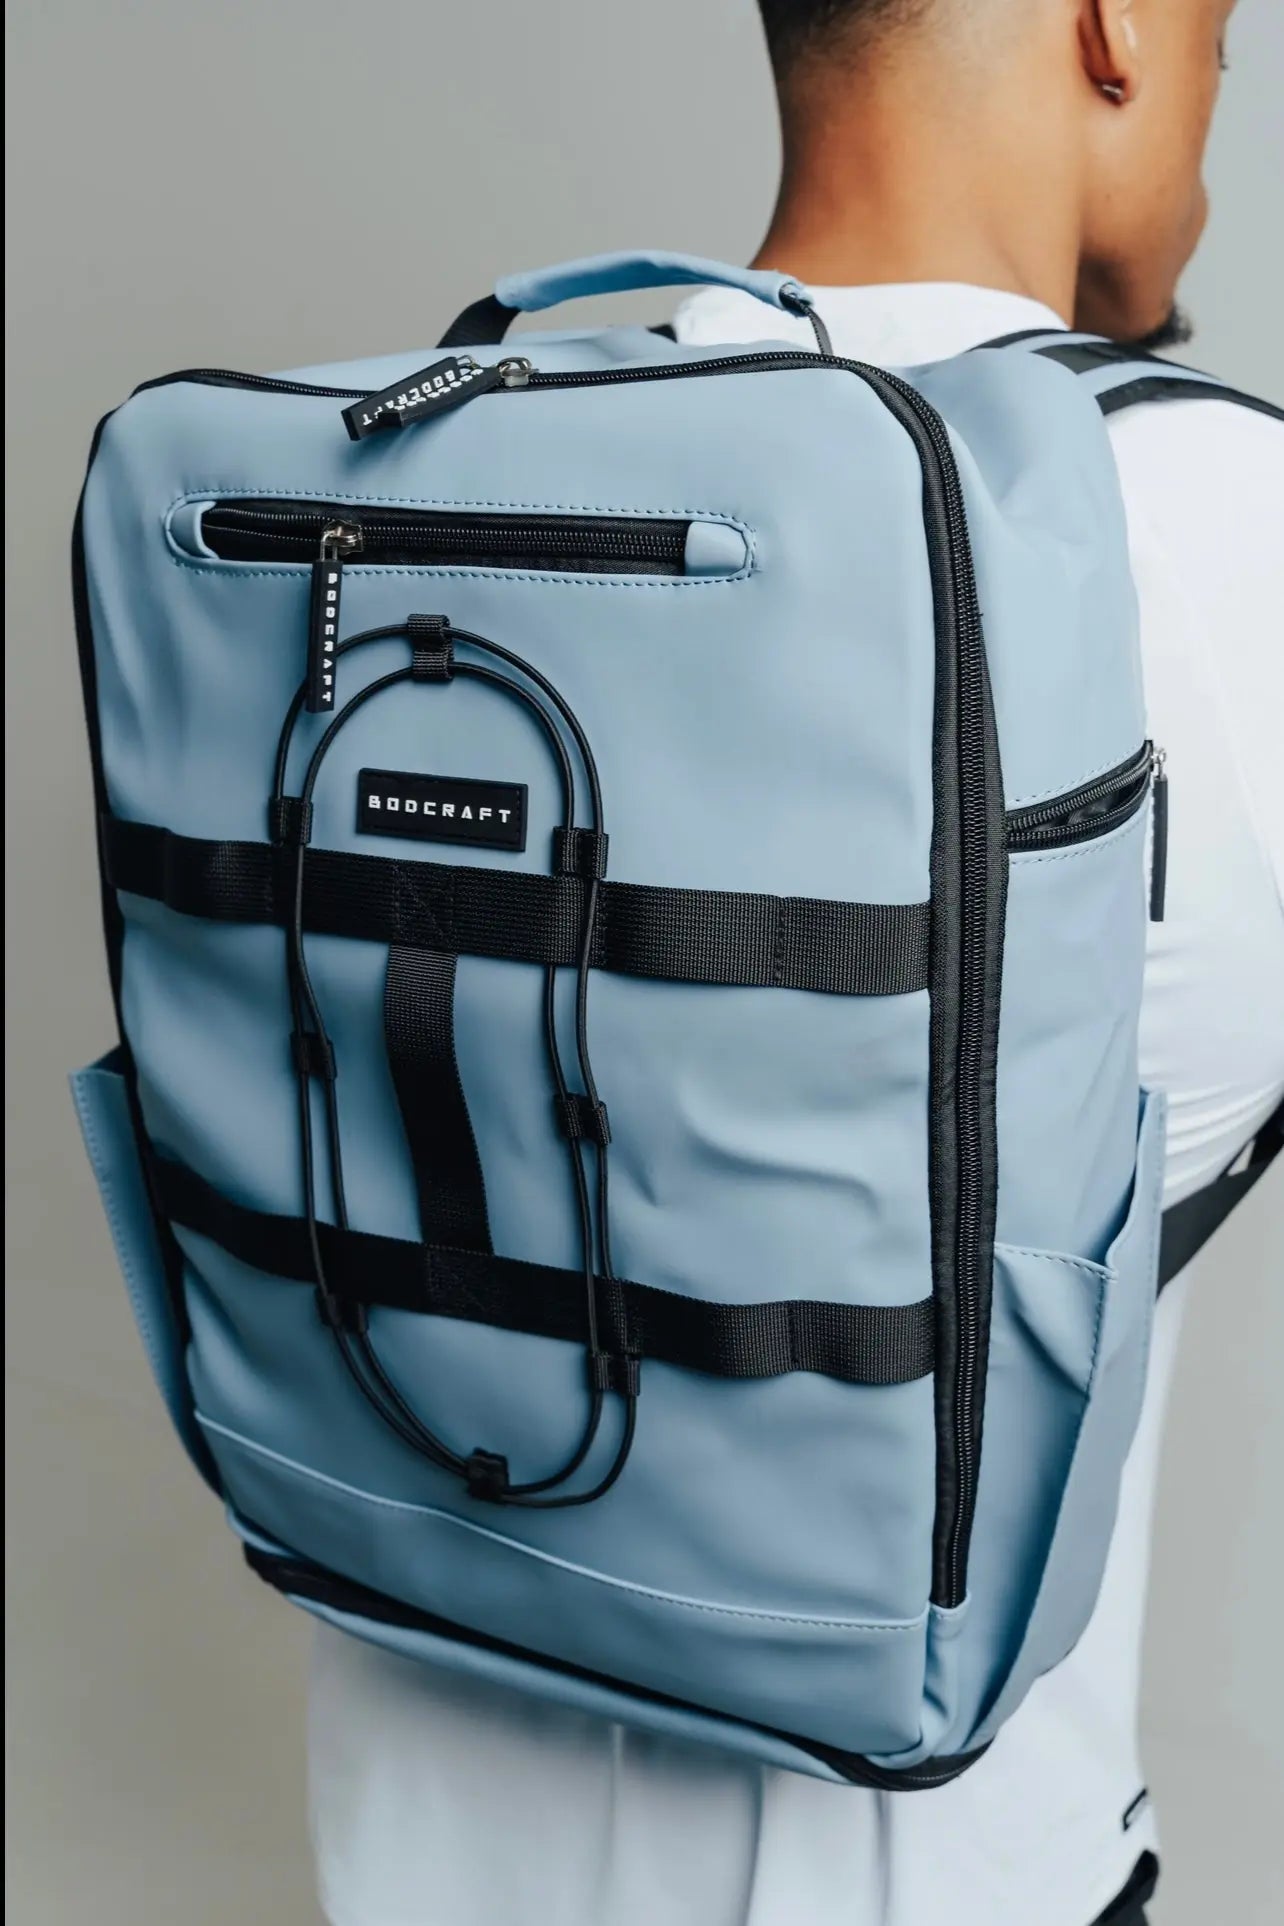 BodCraft Ai1 Backpack - Carolina Blue